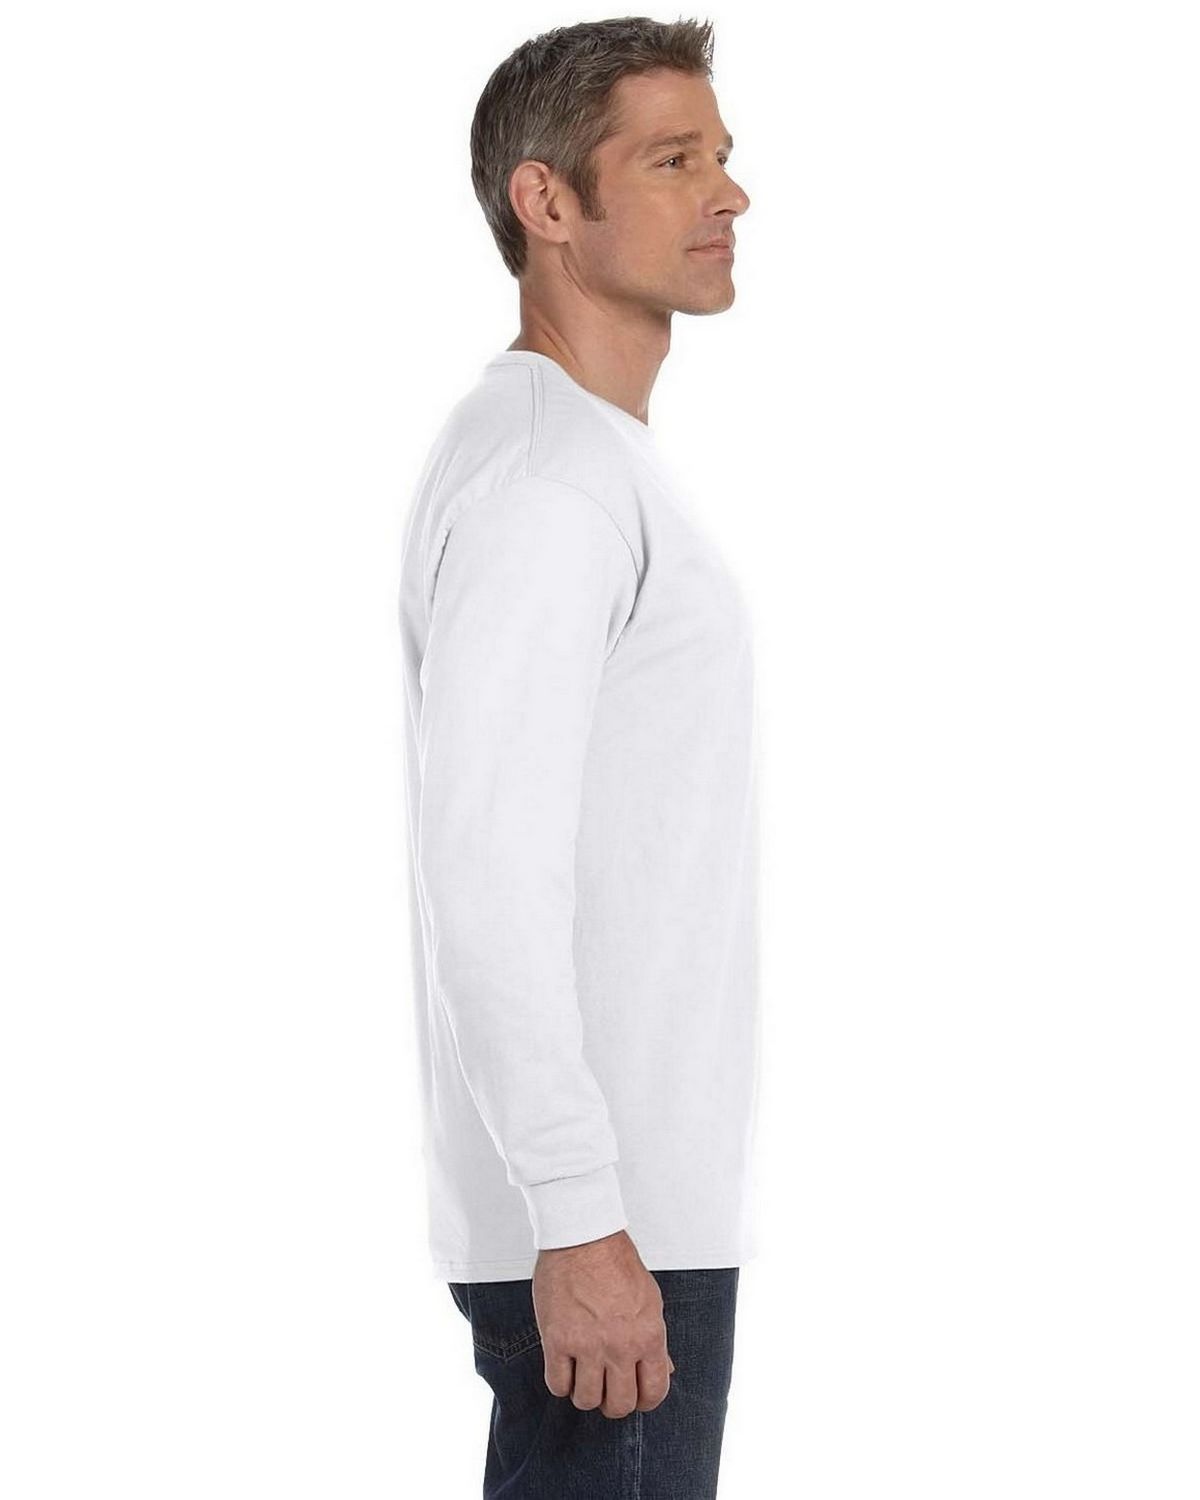 Download Gildan G540 Heavy Cotton Long Sleeve T-Shirt